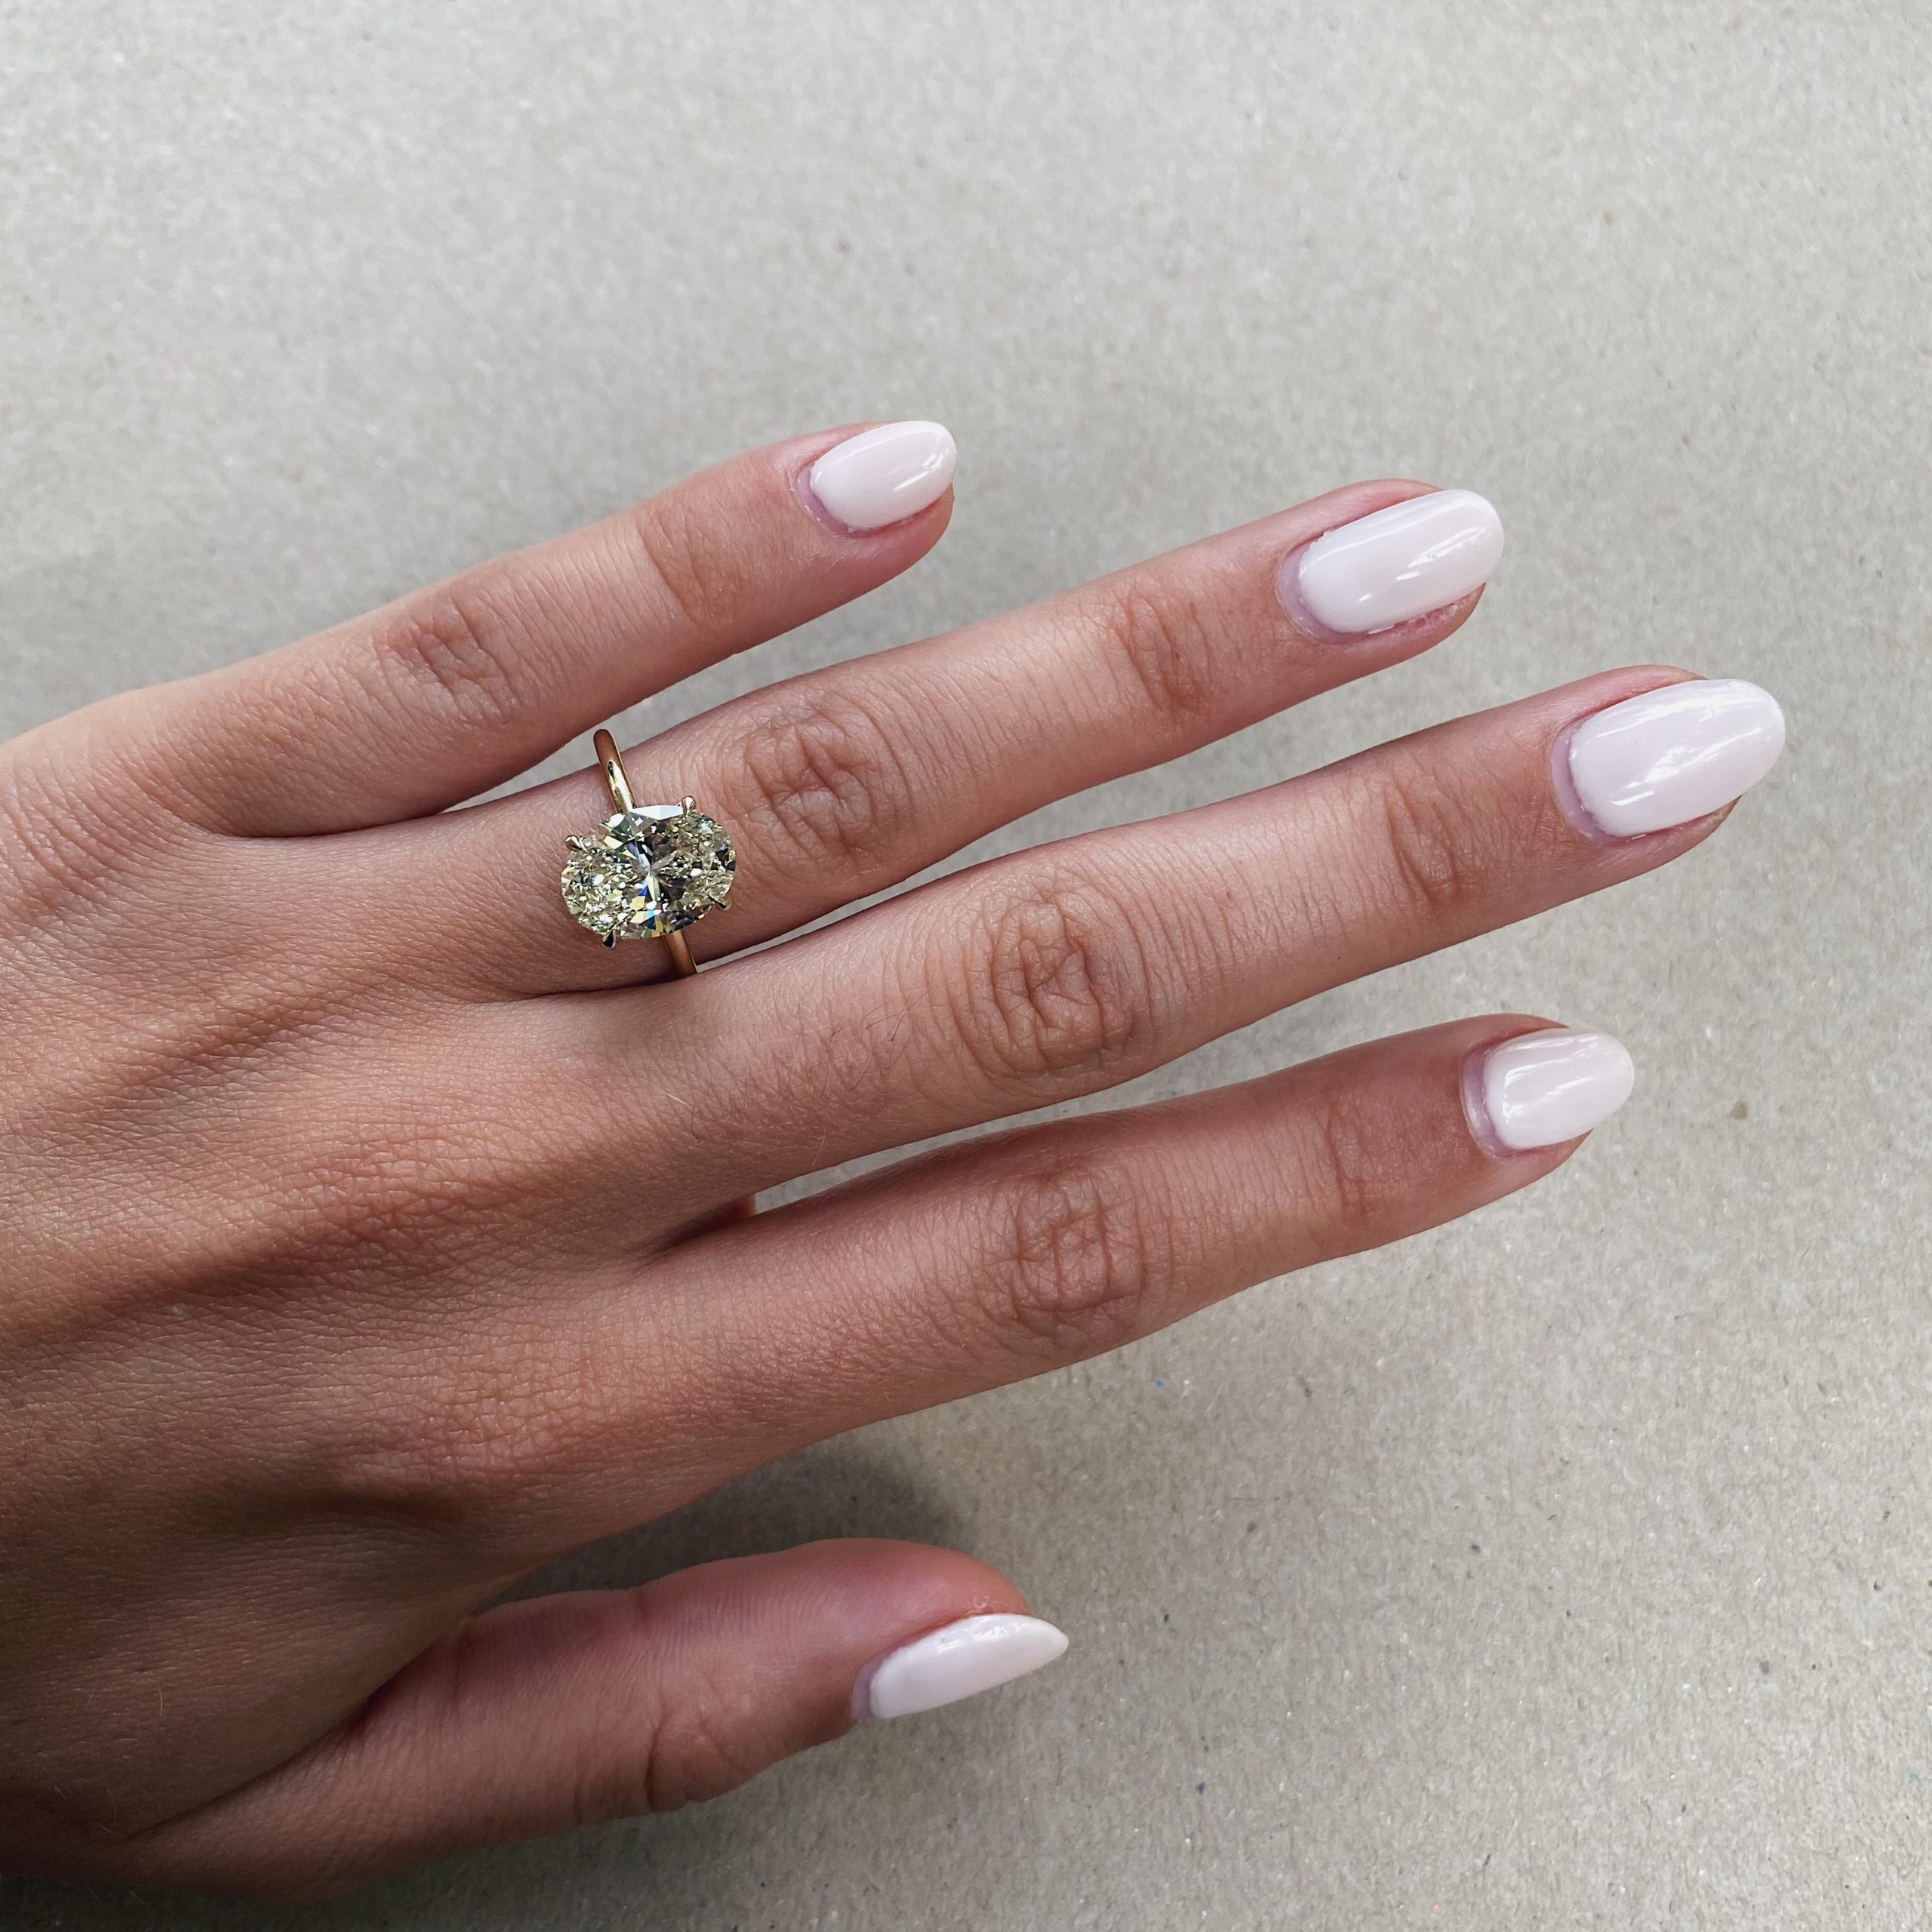 Nicolle ring - 1.51 carat pear shape diamond ring